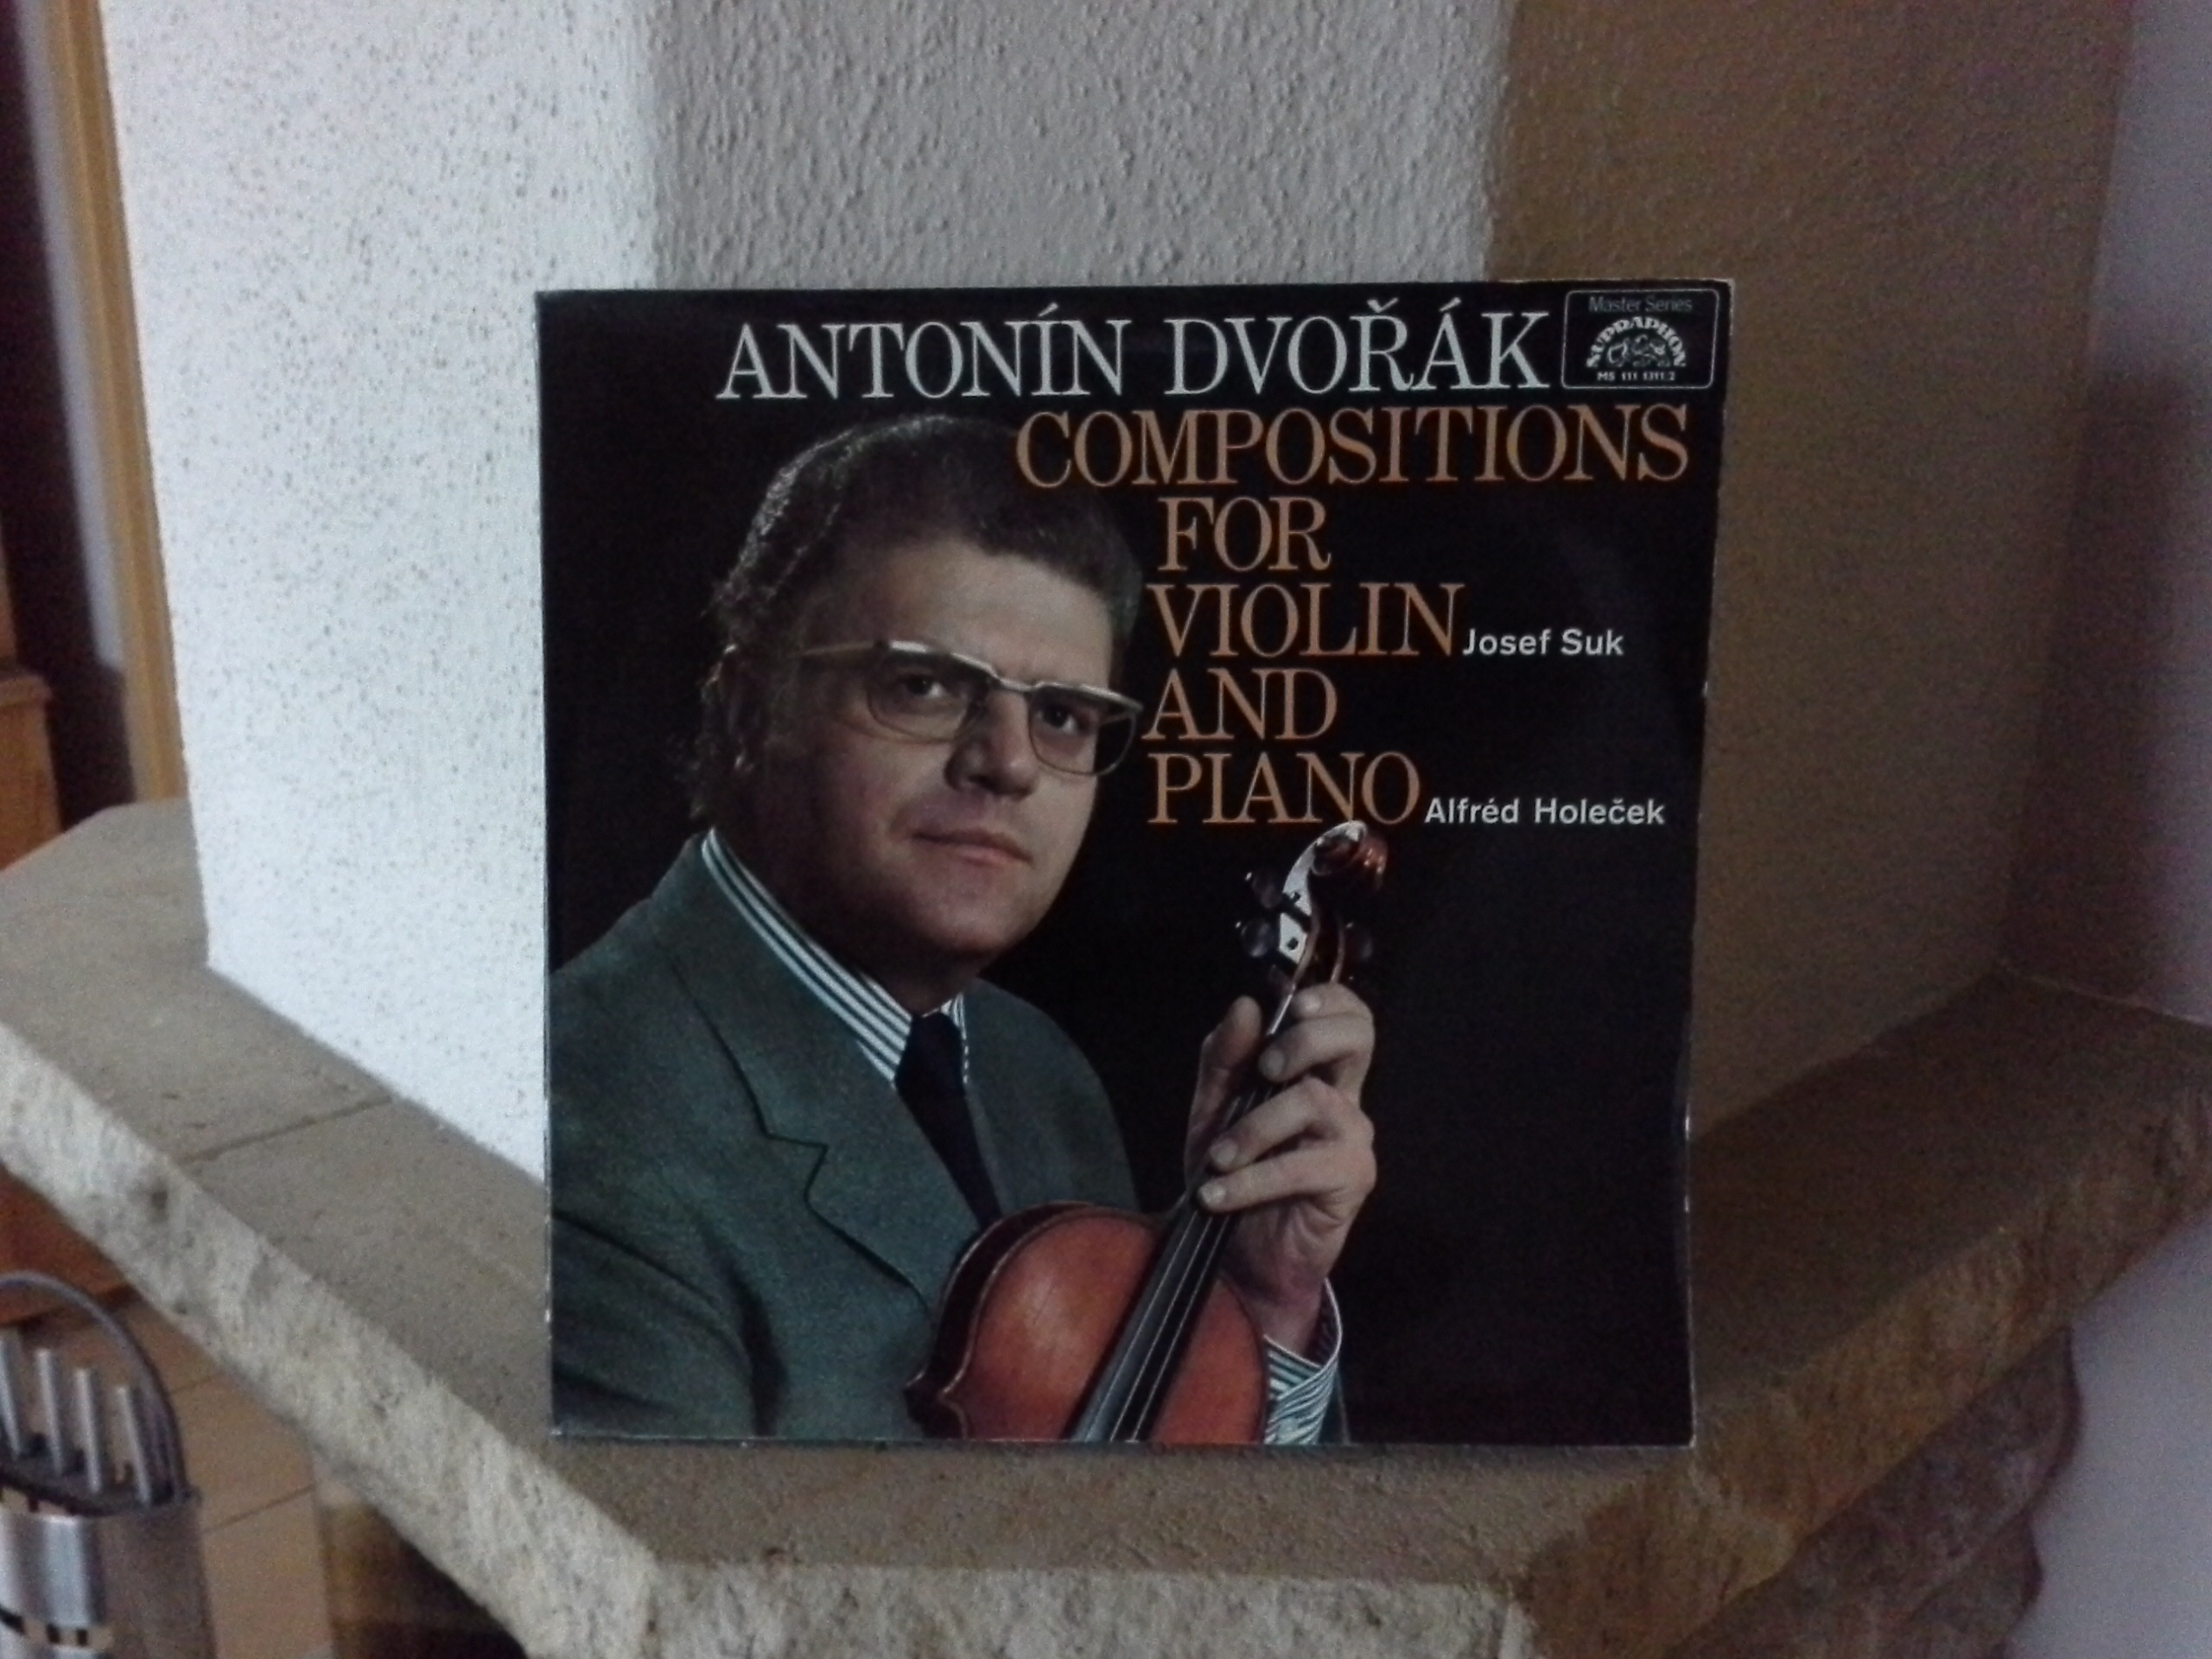 A. Dvorak - Compositions for Violin and Piano